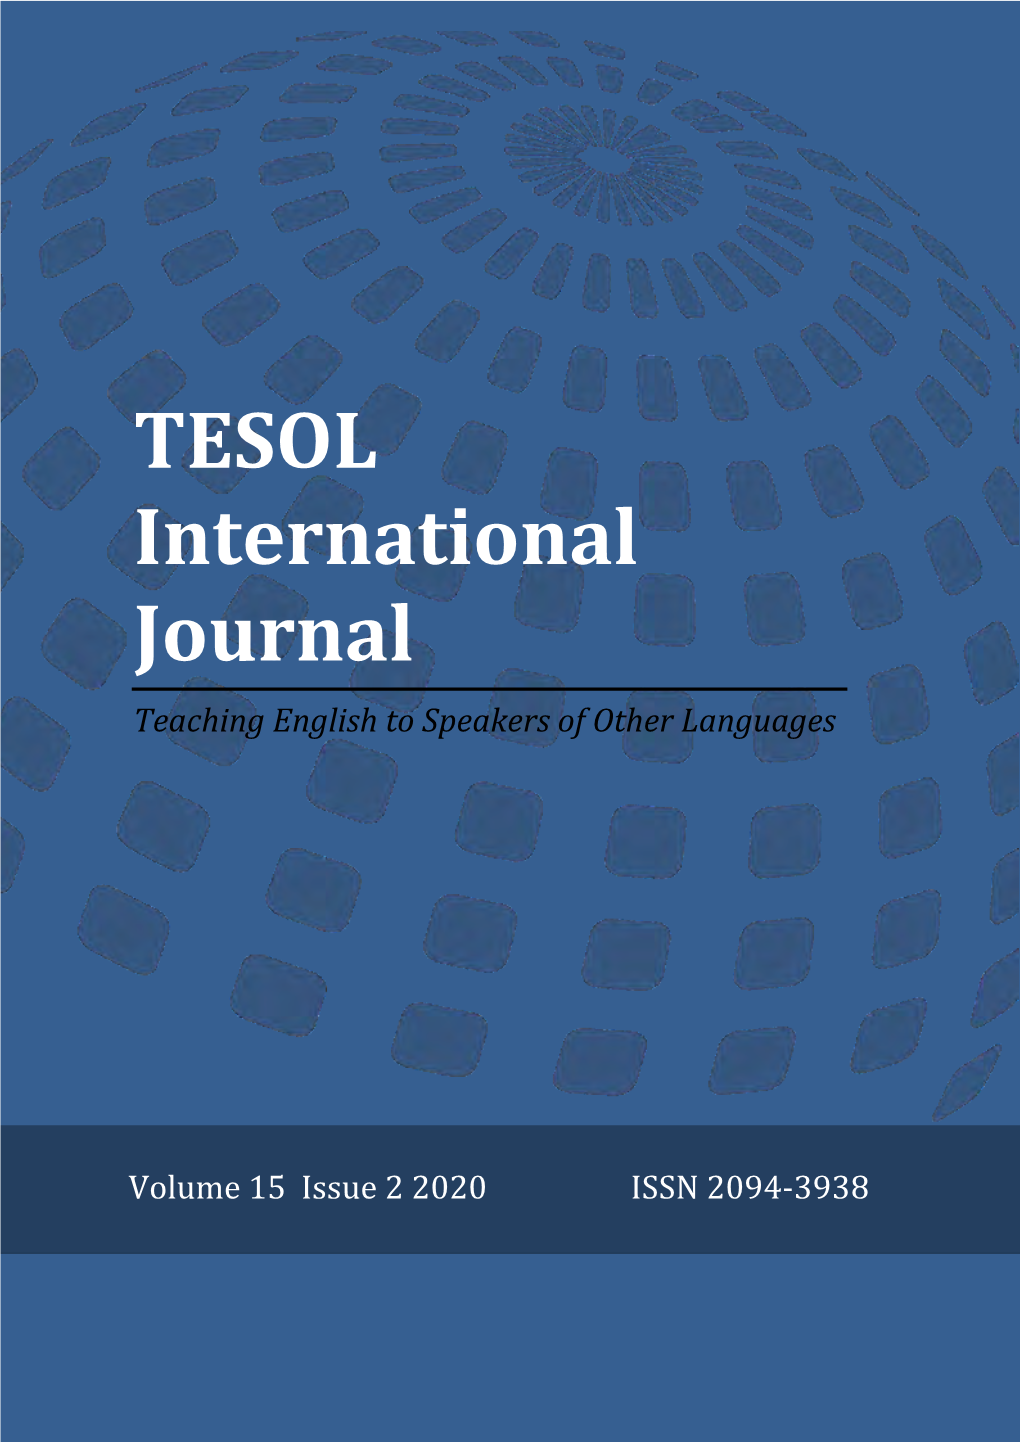 TESOL International Journal Teaching English to Speakers of Other Languages